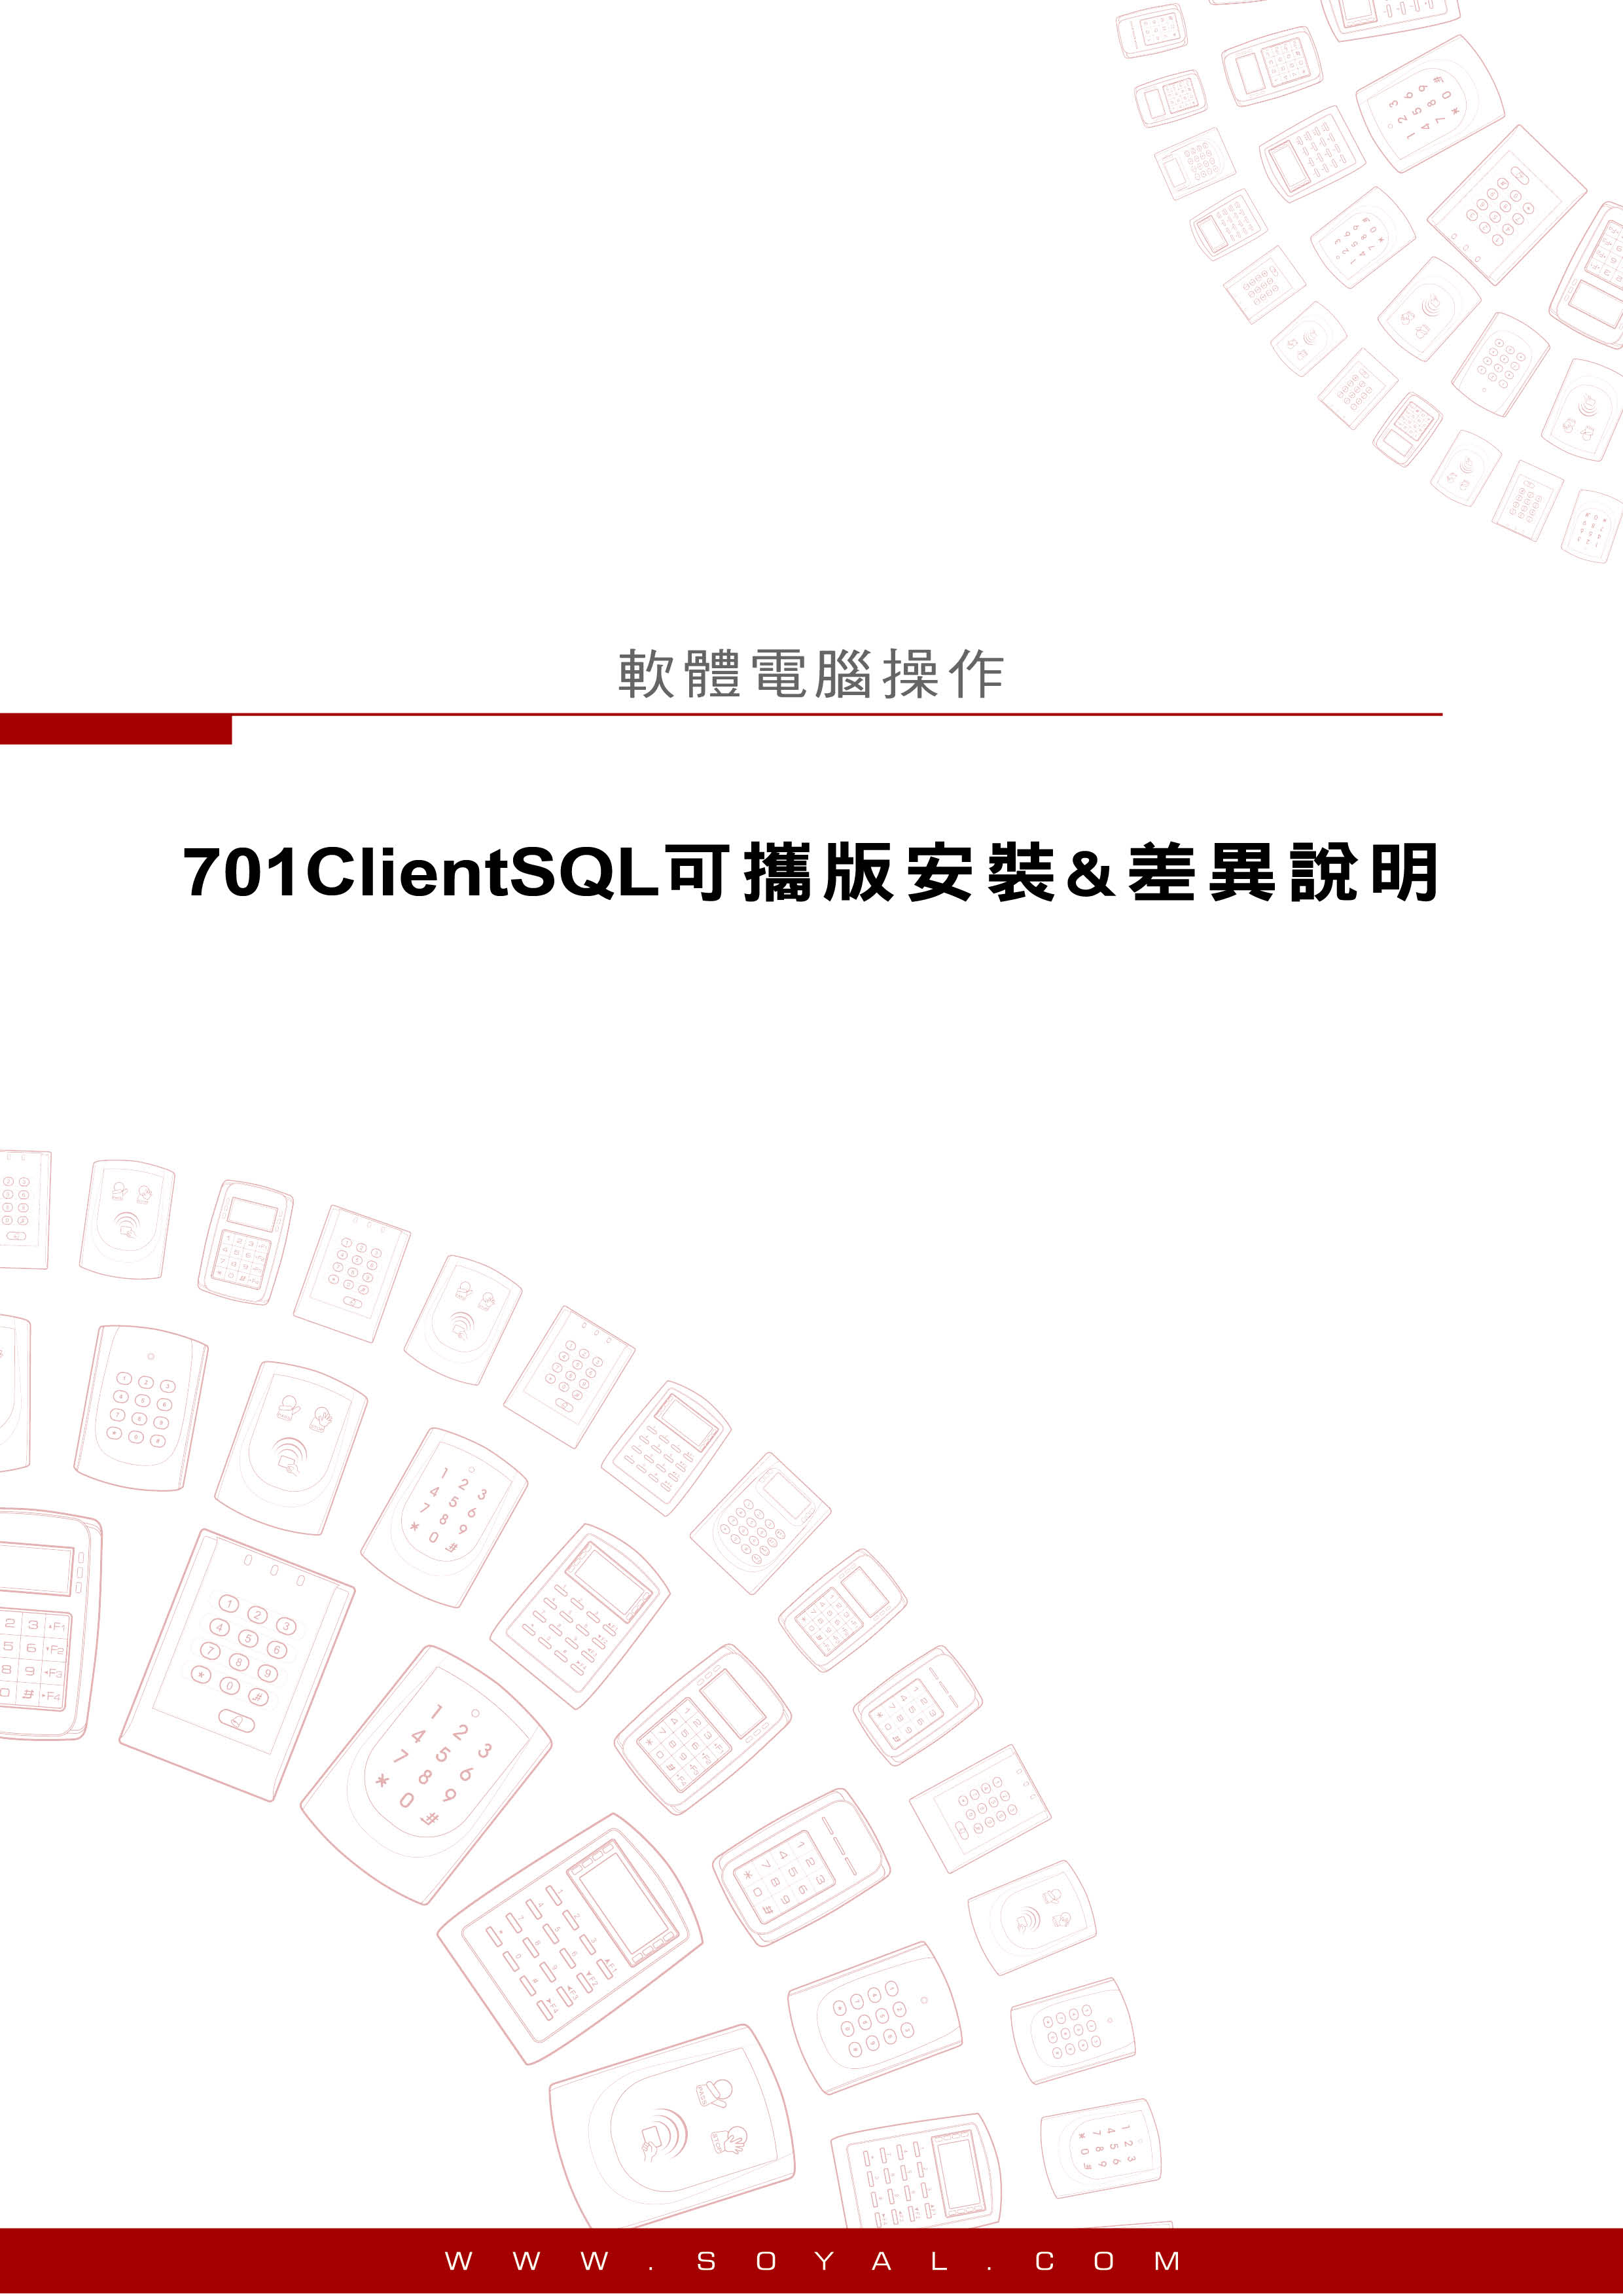 701ClientSQL可攜版安裝&差異說明(圖)